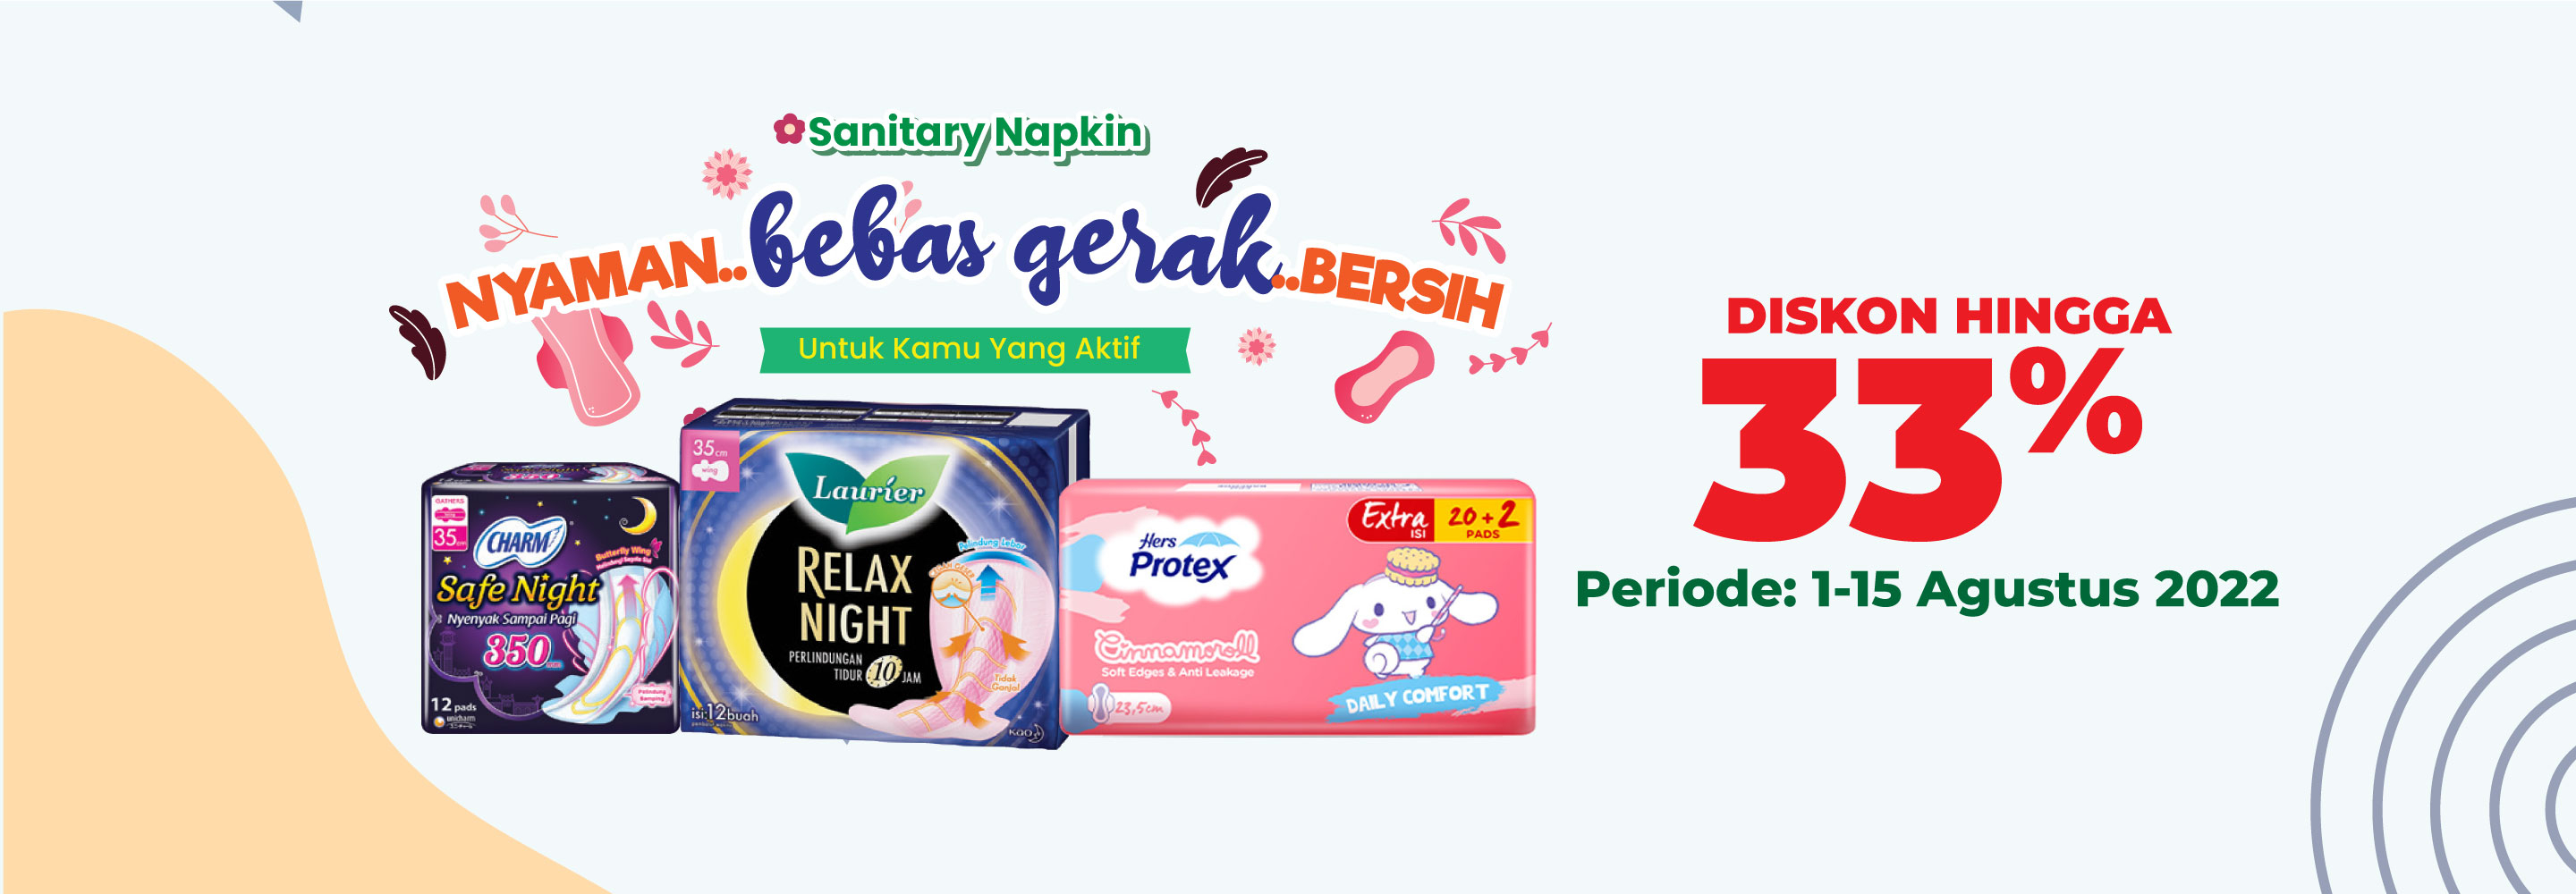 Banner promo Promo Sanitary Napkin Alfamart Alfamart